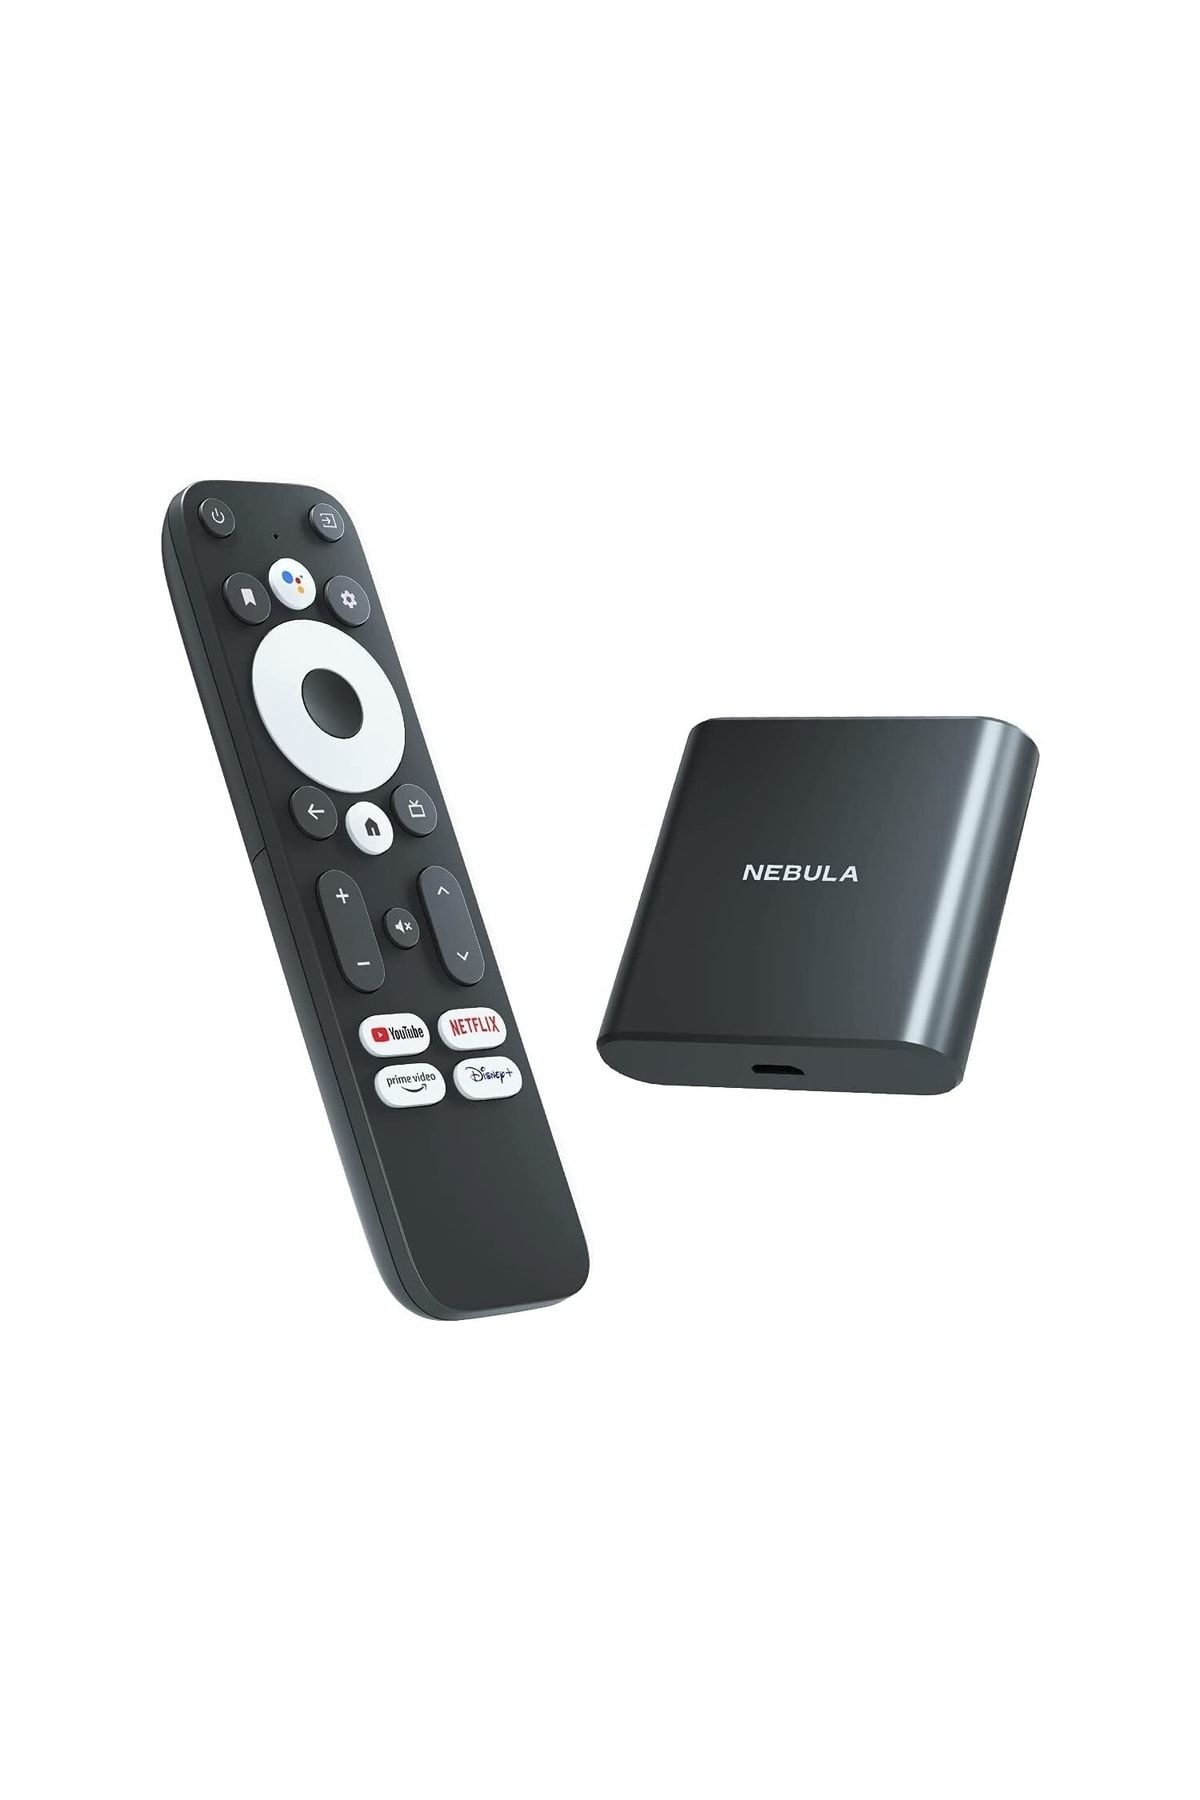 Anker Nebula 4k Tv Box Android Tv Media Player - Chromecast - D0480